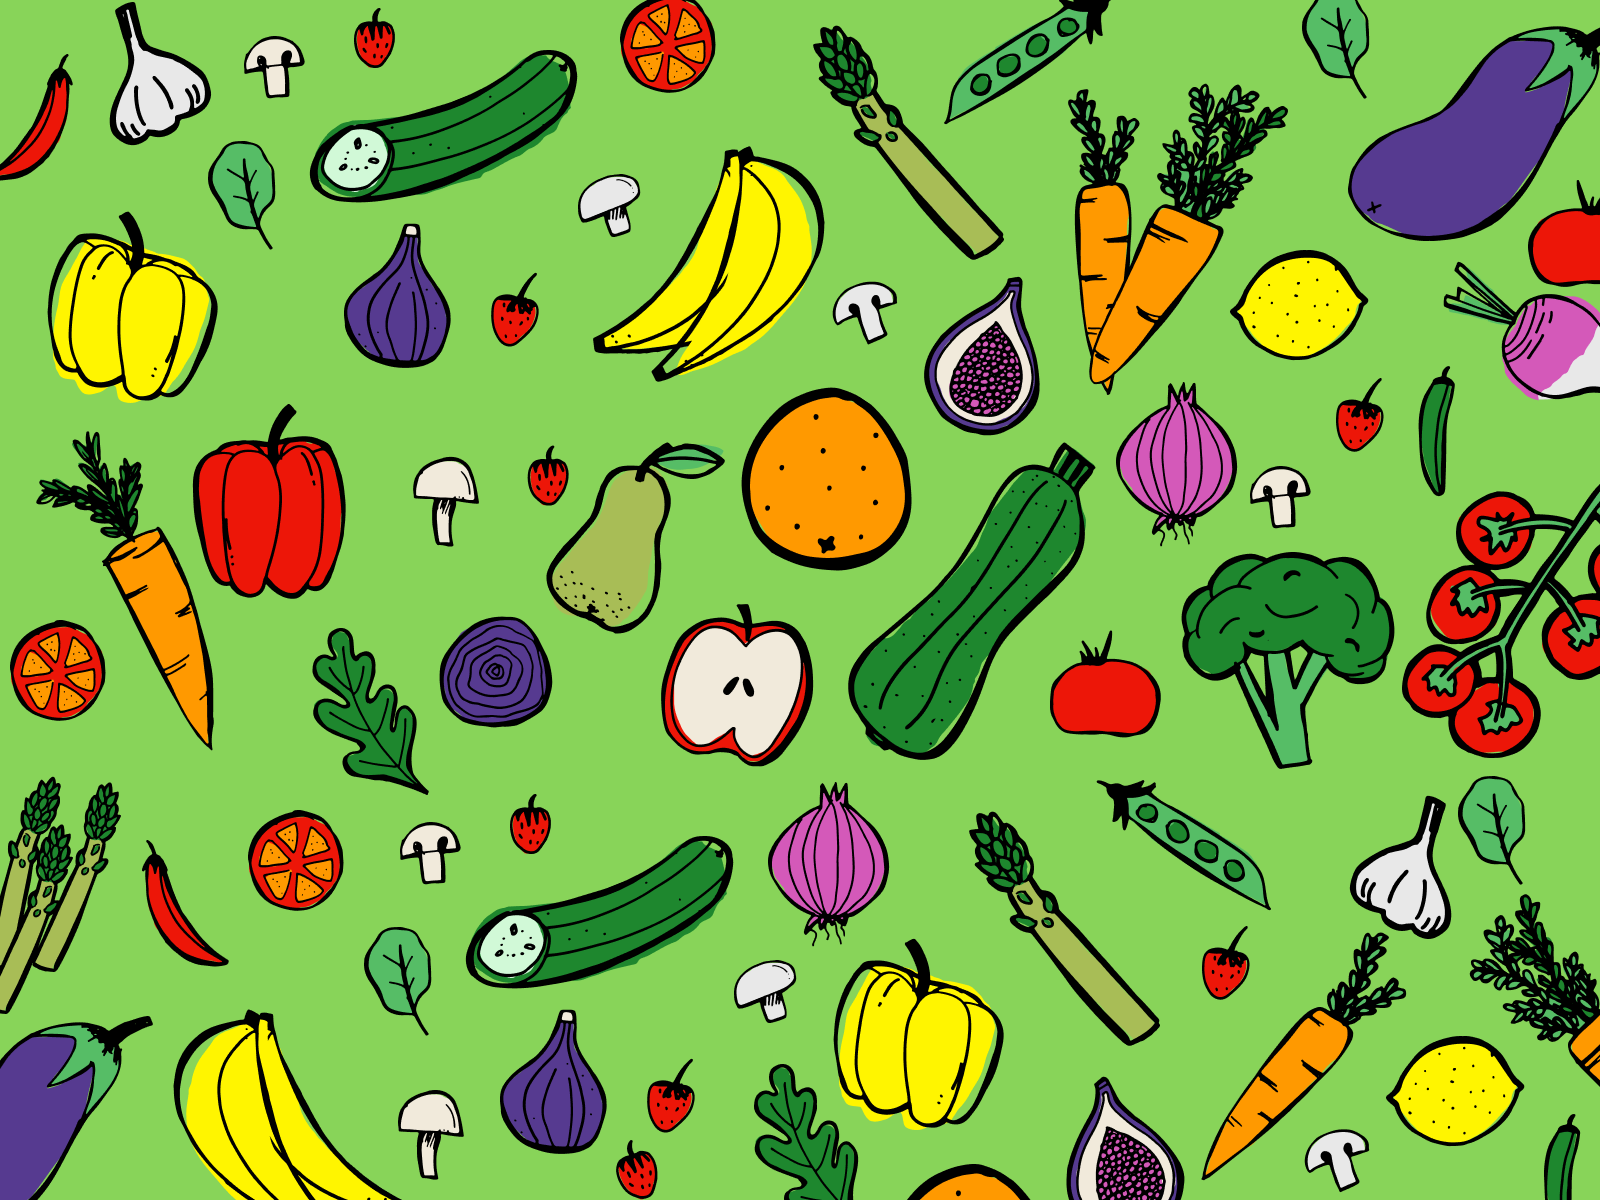 Geoff's Fruit & Veg Box Illustrations by Liz Hamburger on Dribbble